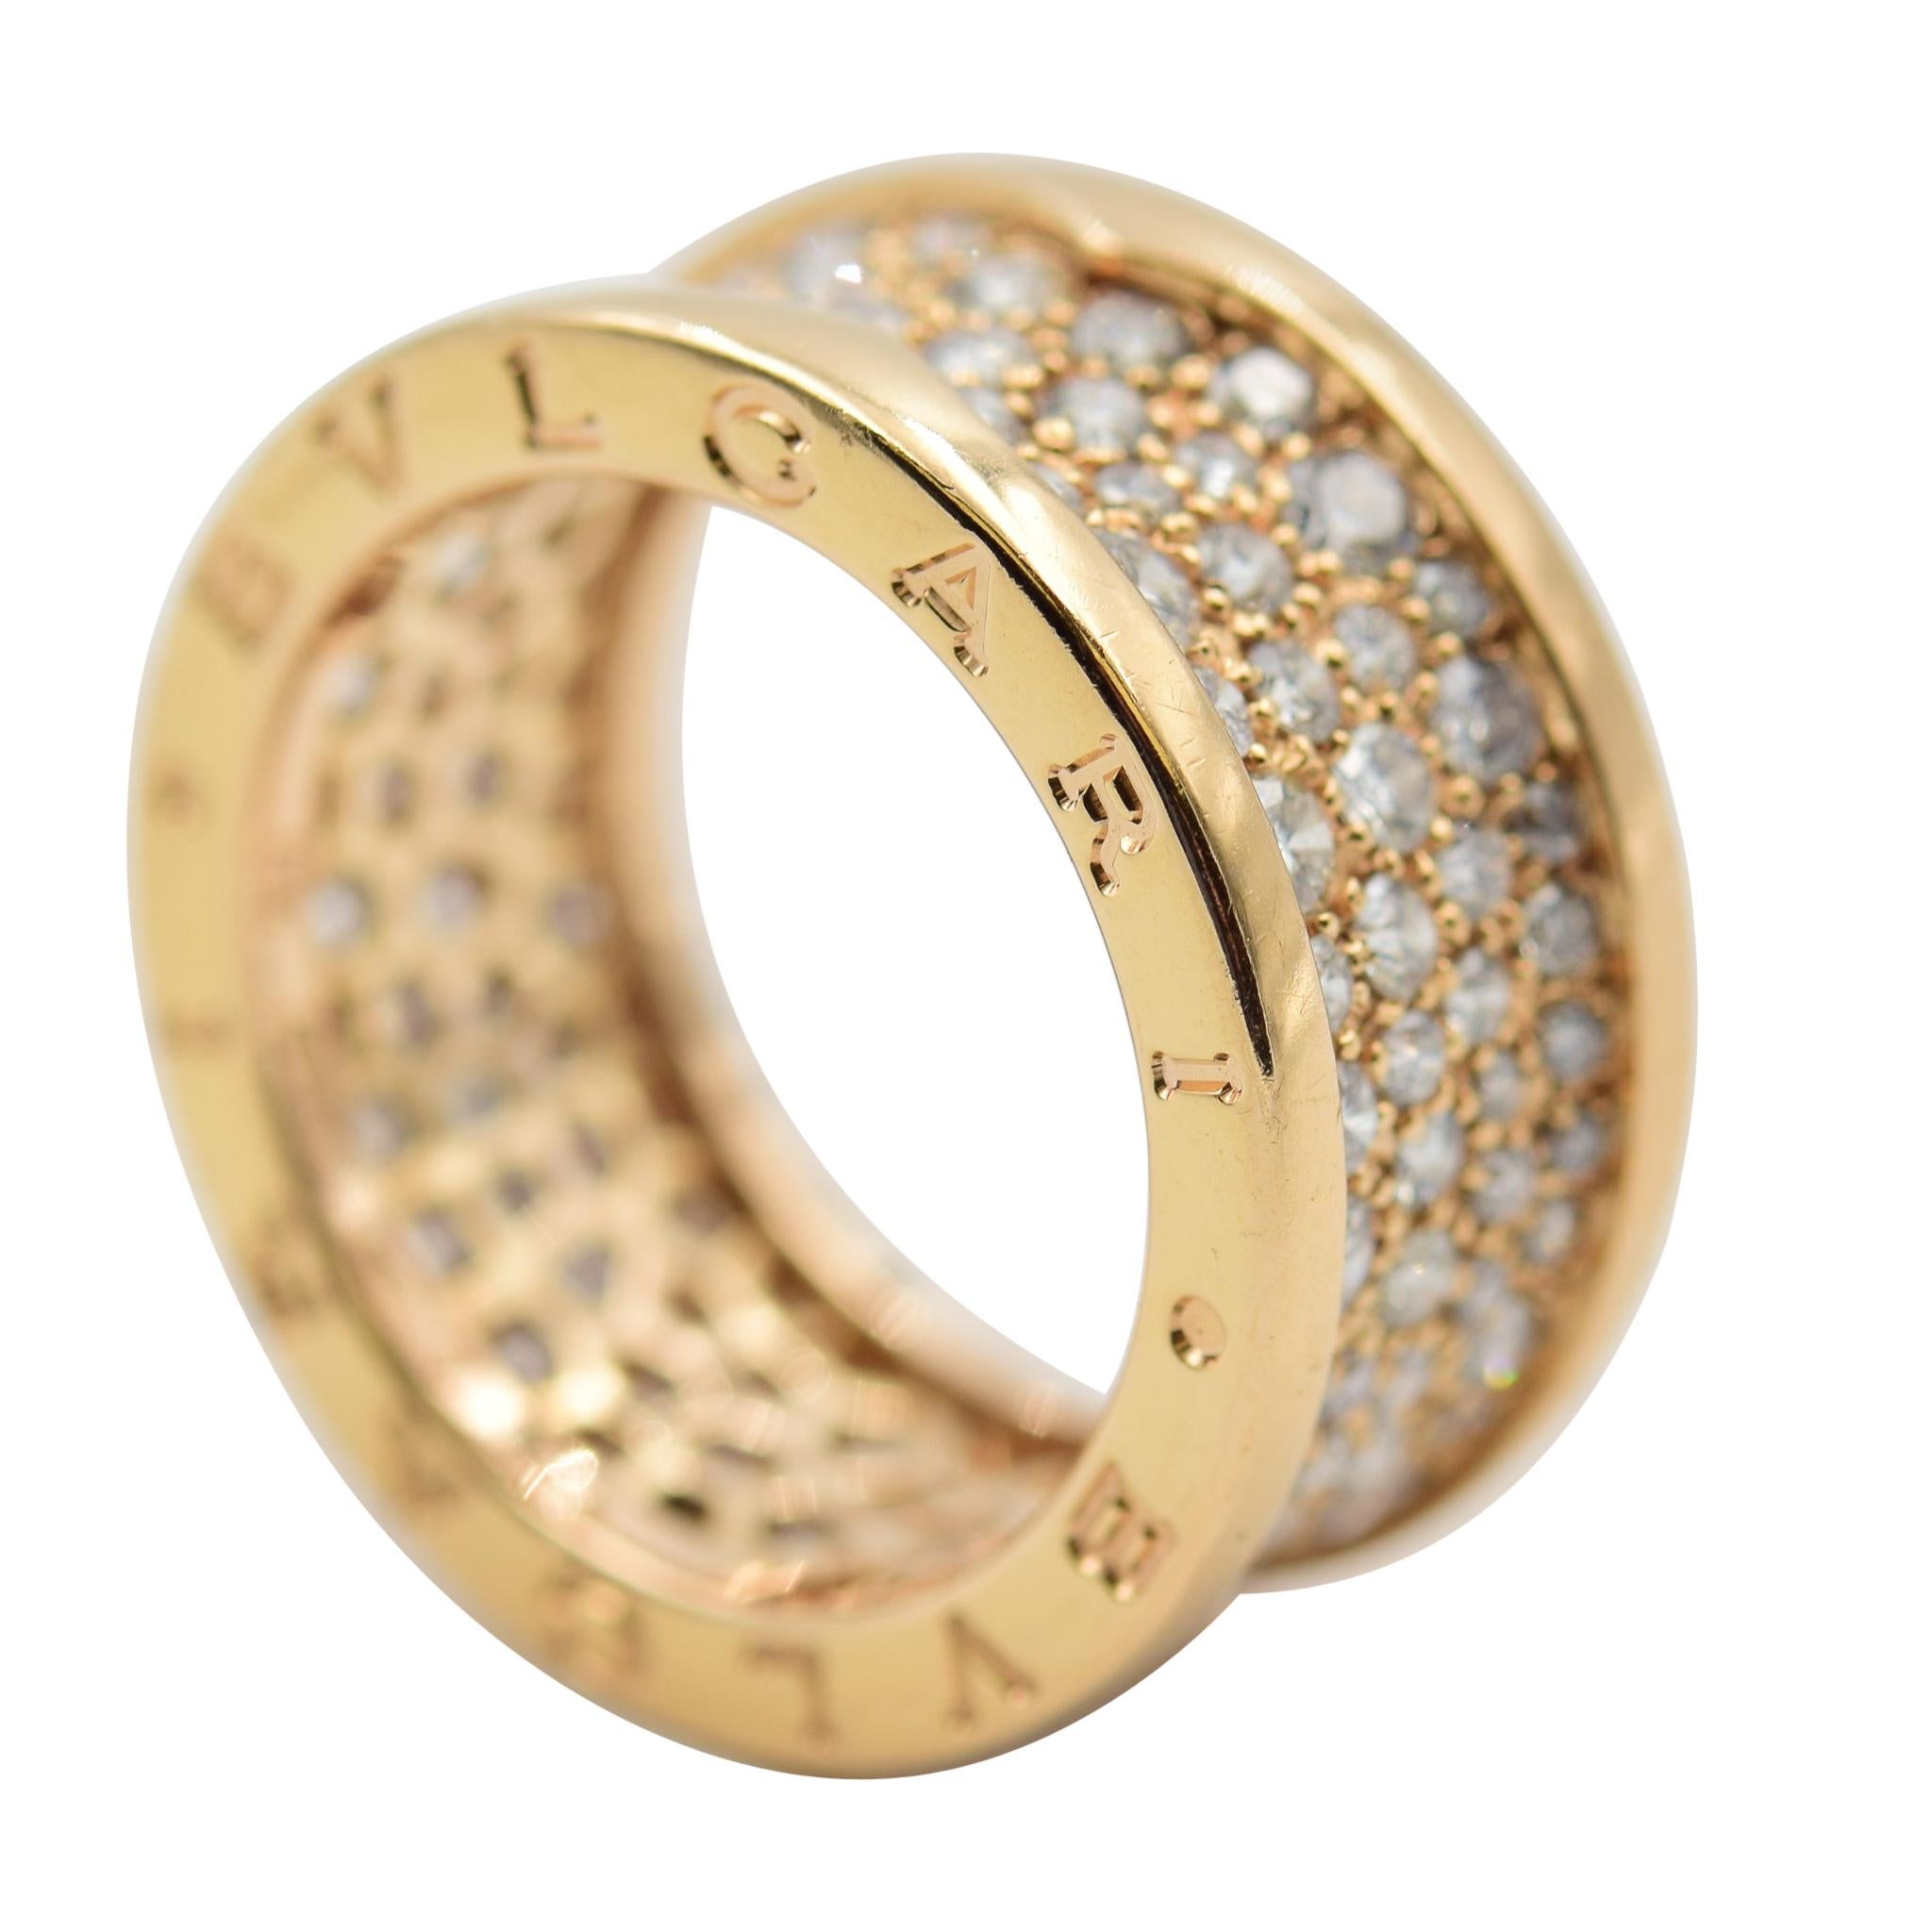 Bulgari B.zero1 Ring 345585 in 18 Karat Gold with Pave Diamond on 